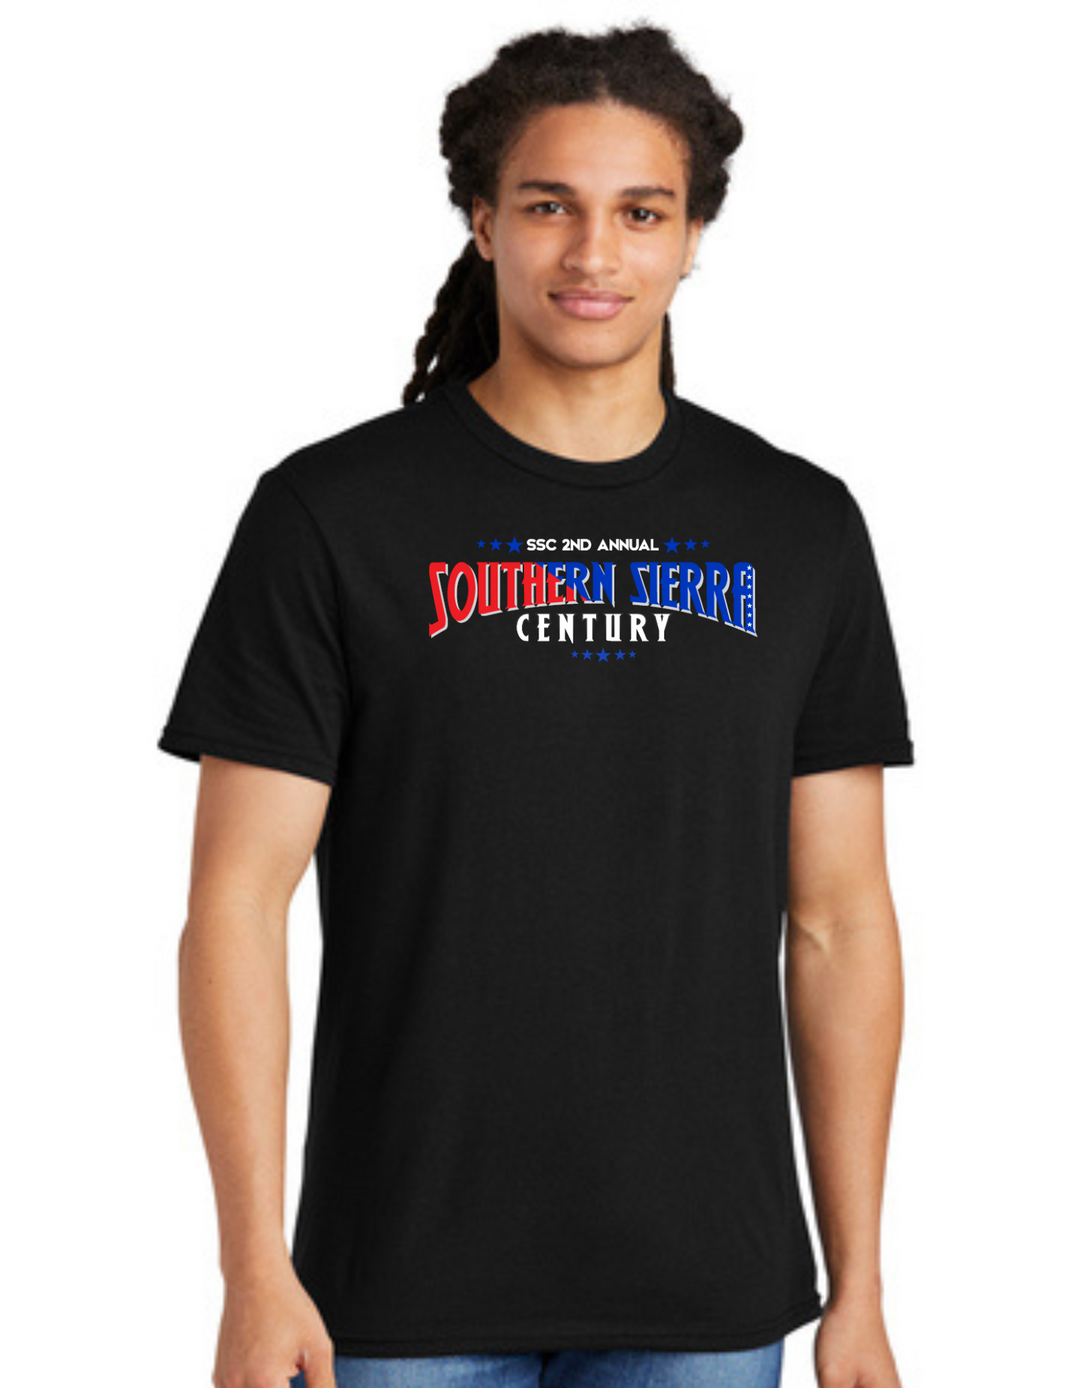 Southern Sierra T-Shirt